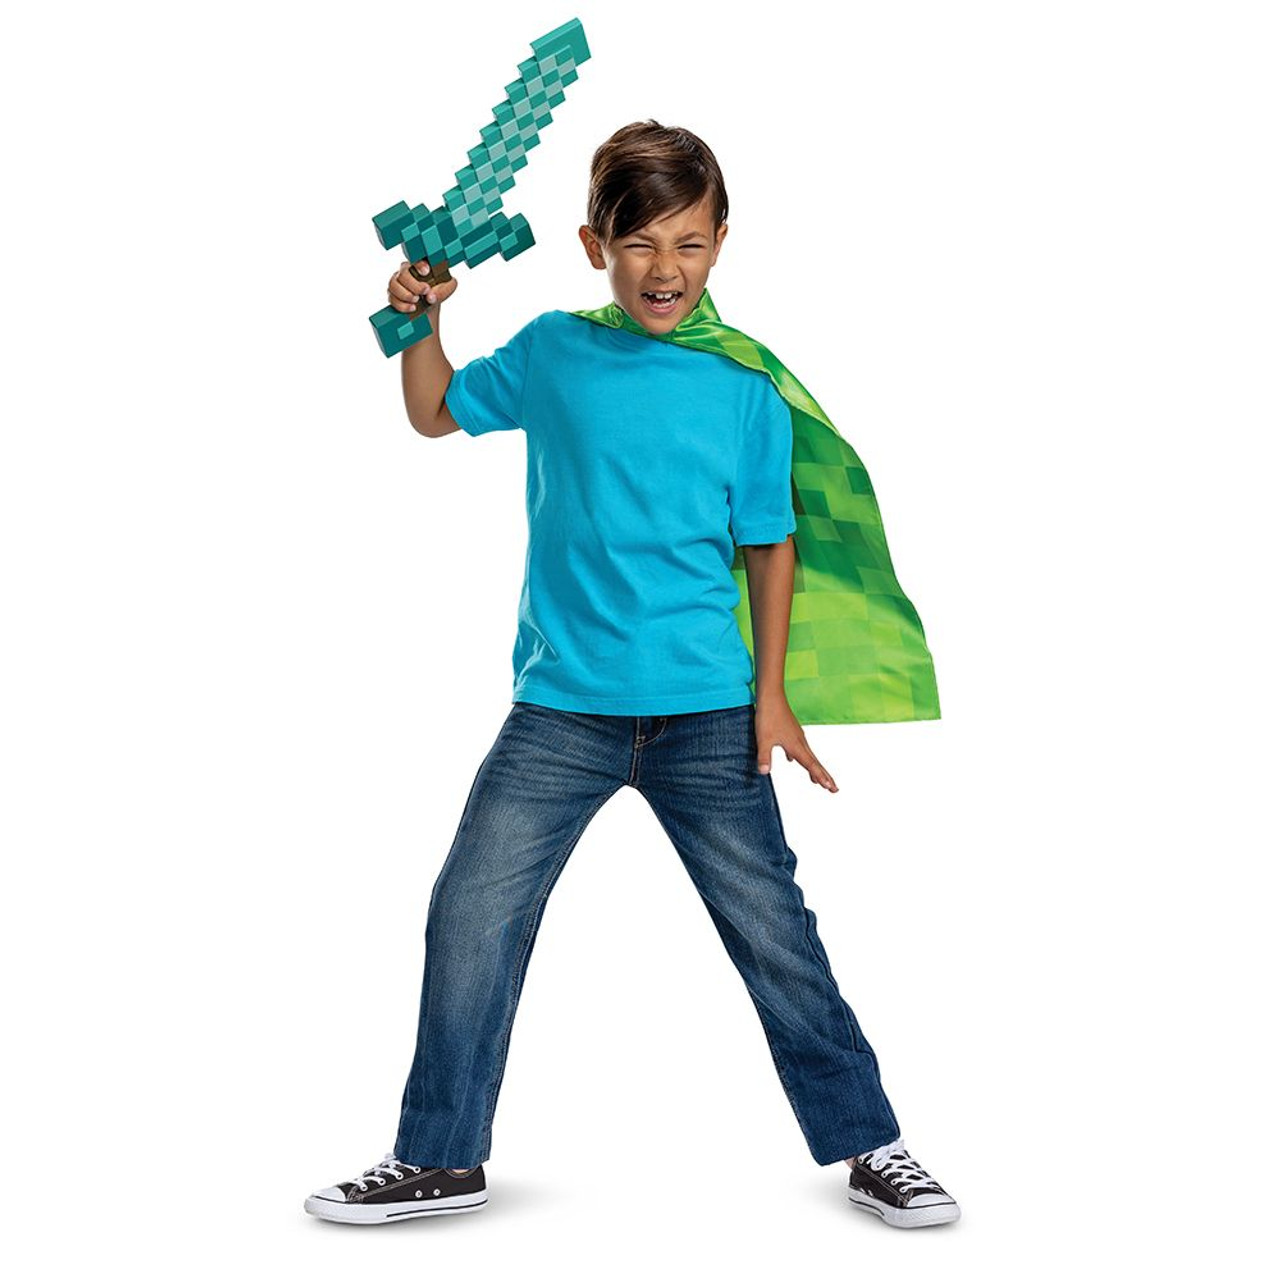 Child Ninja Accessory Weapon Kit